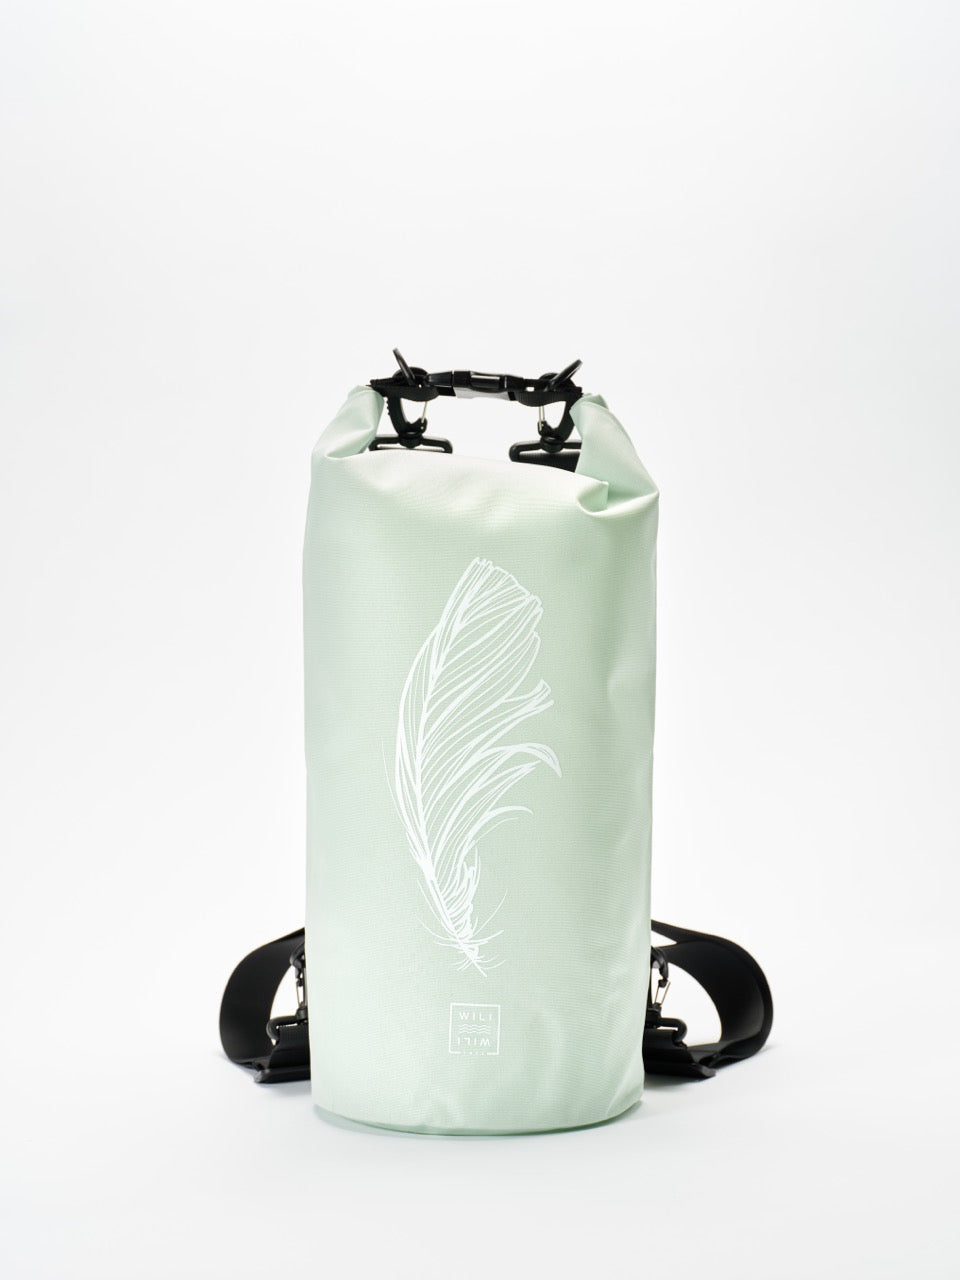 Indian Spirit - 15 Liter Dry Bag - Wave Green